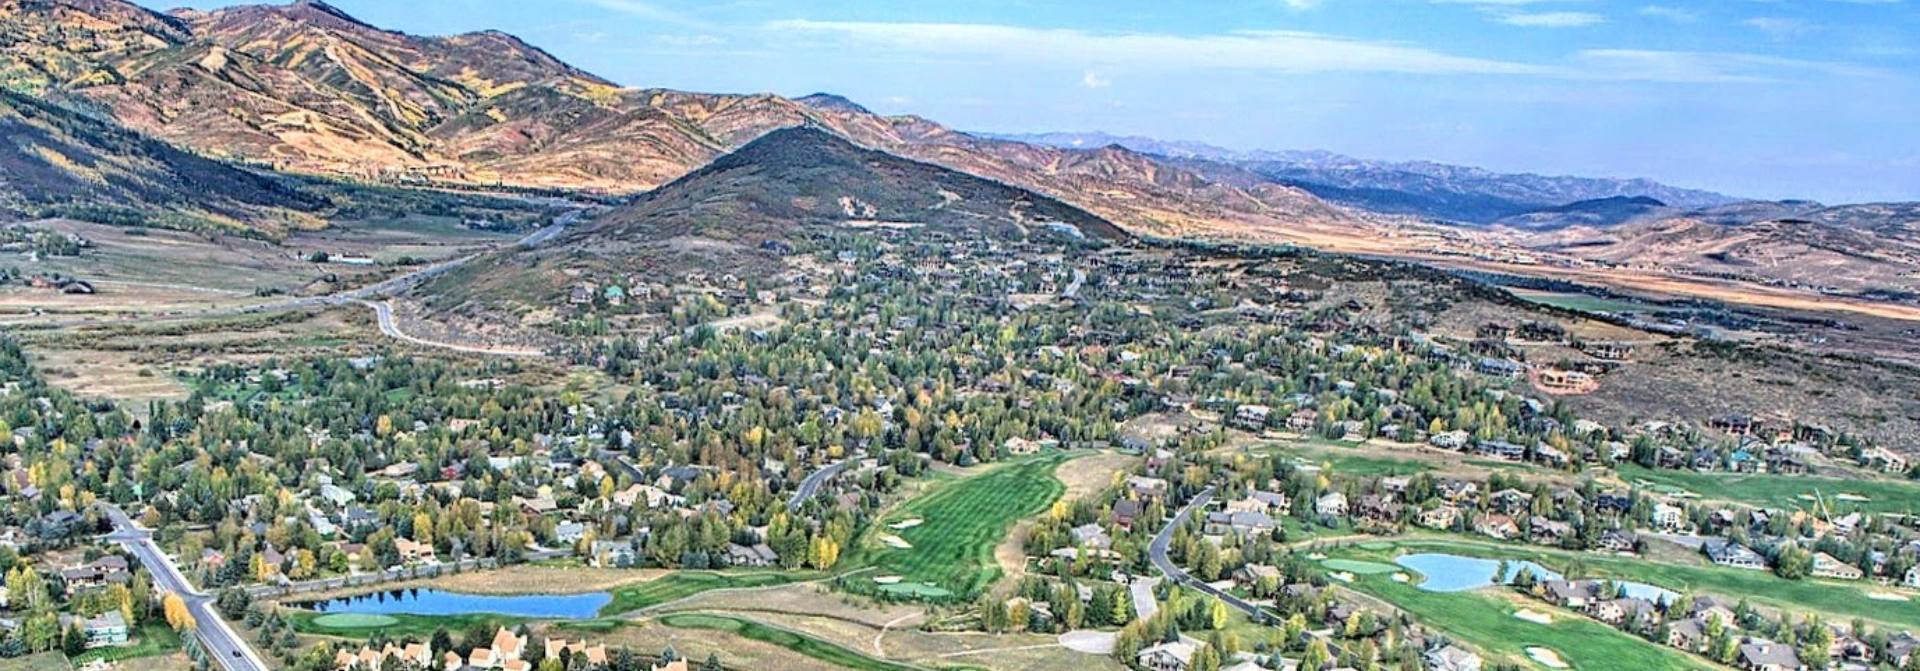 Aeriel View of Park Meadows Condos for Sale in Park City, Utah